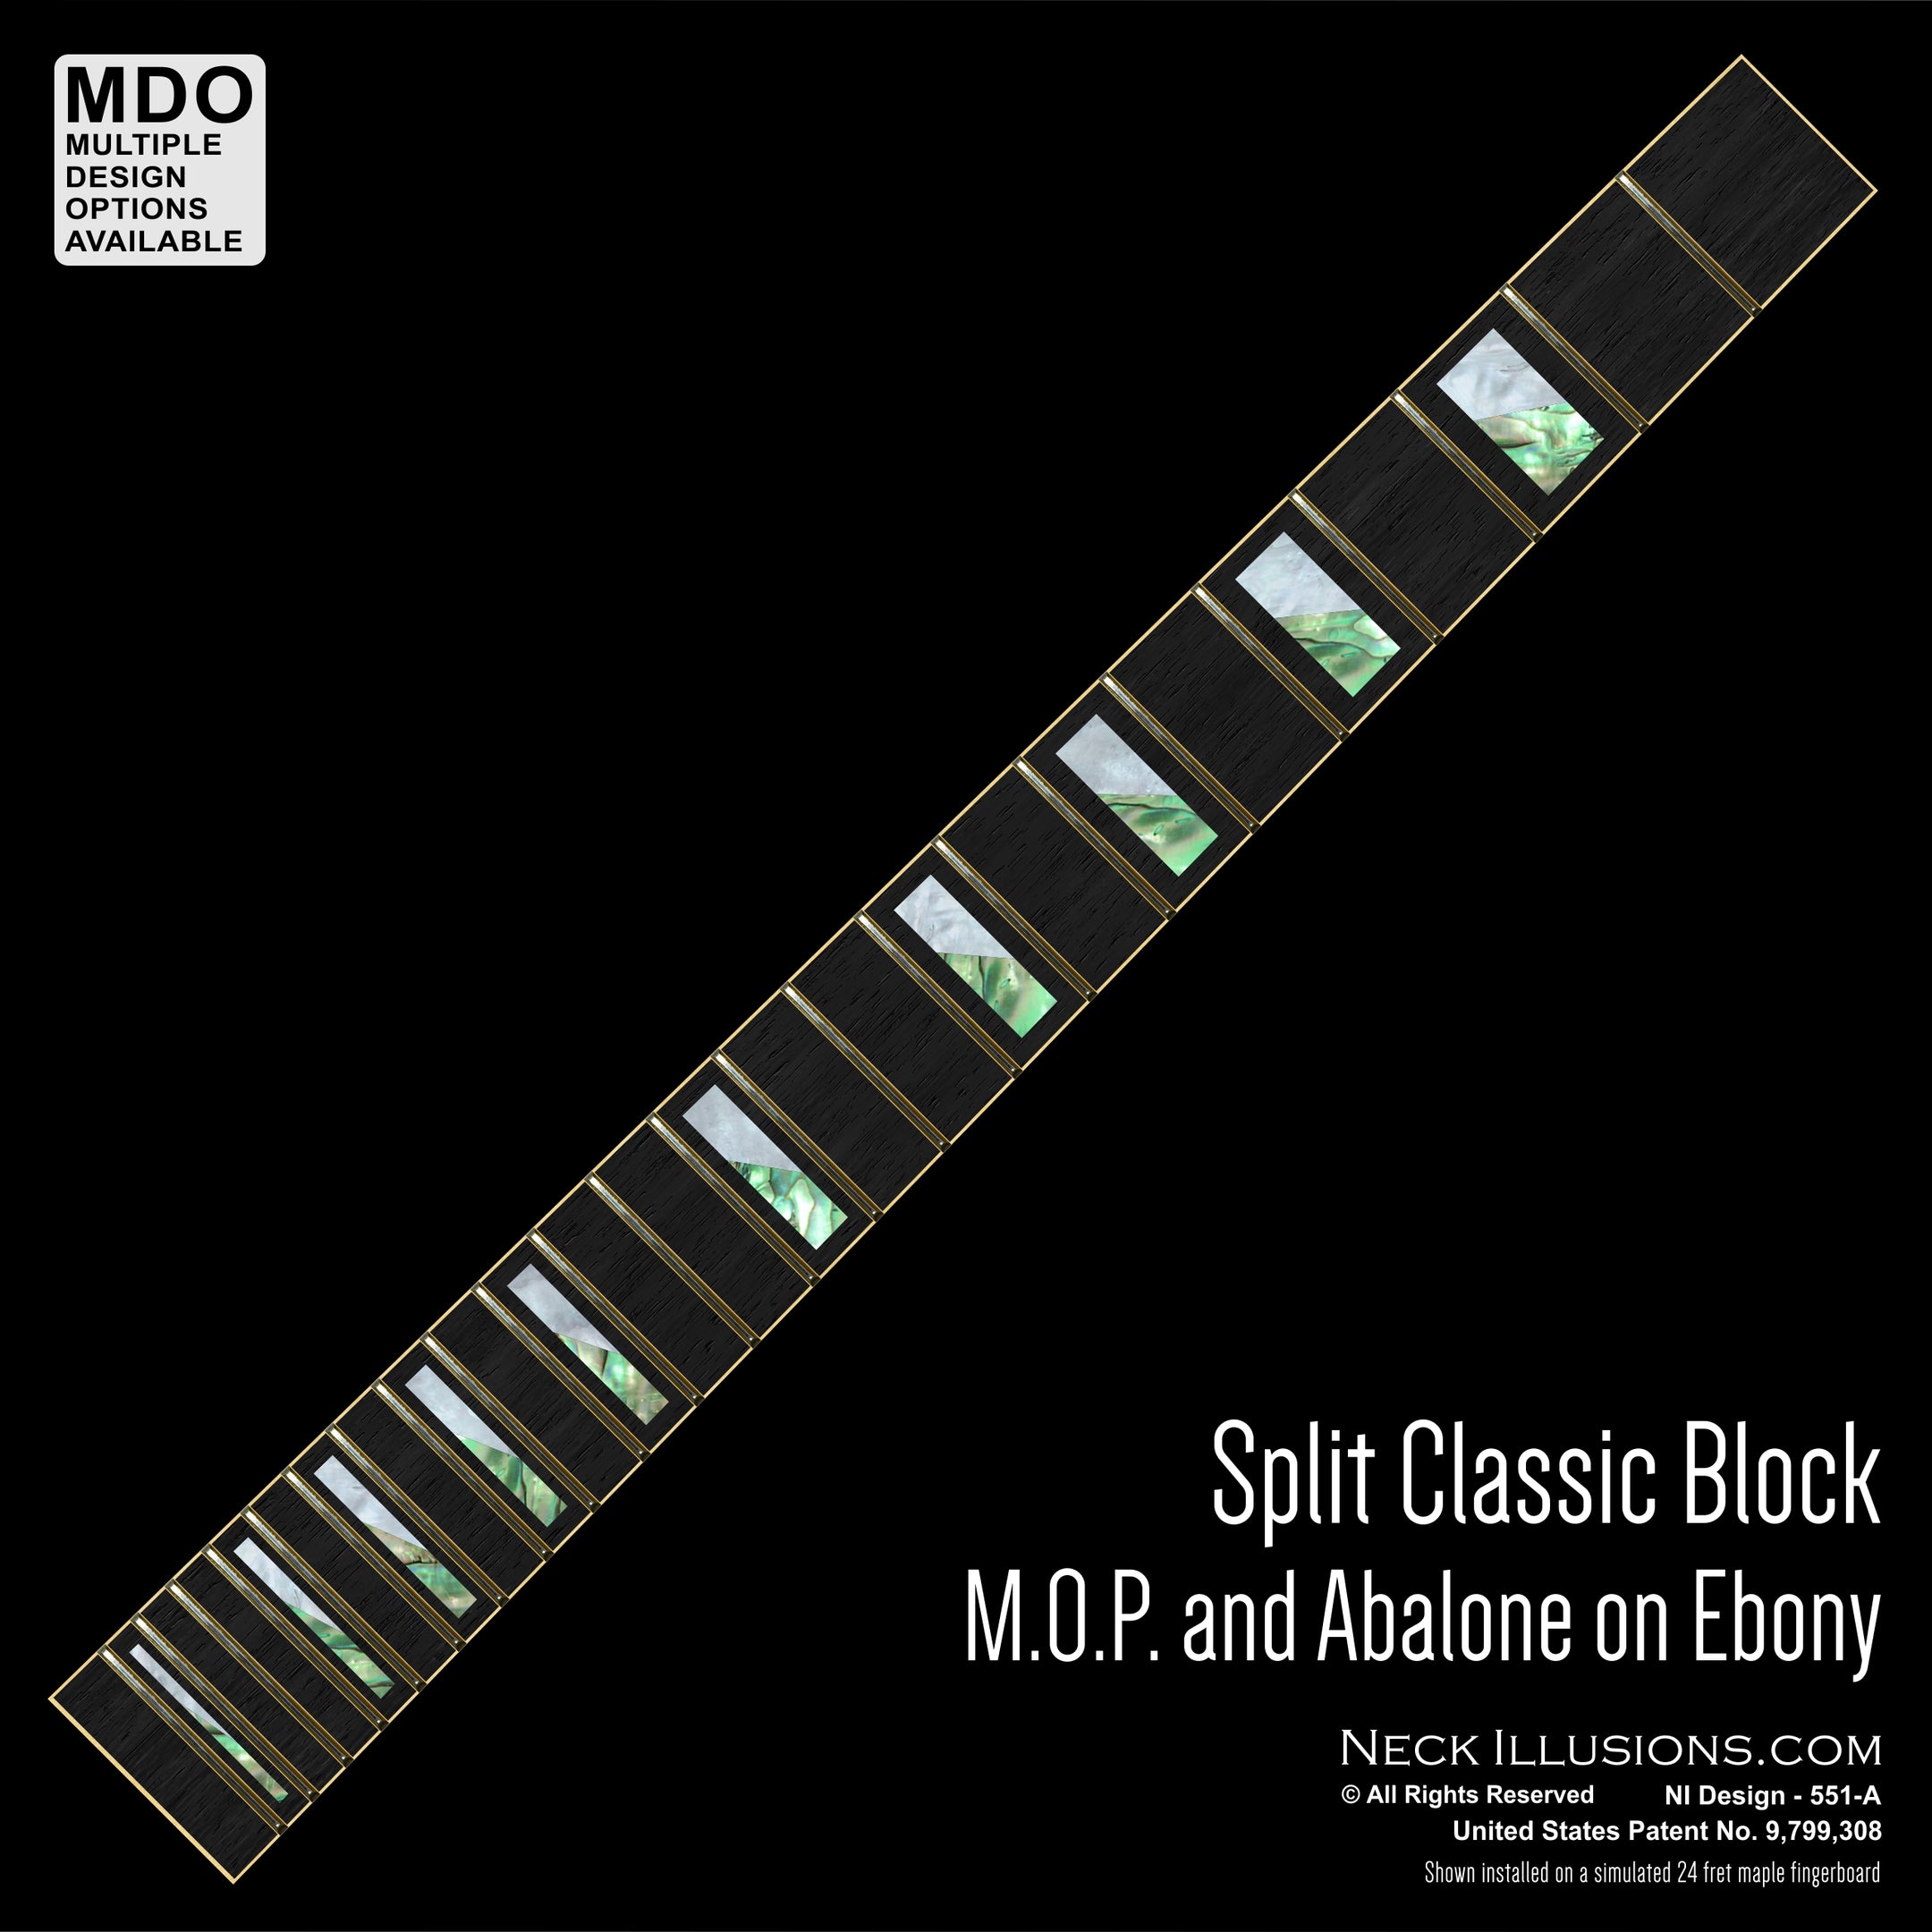 Split Classic Blocks